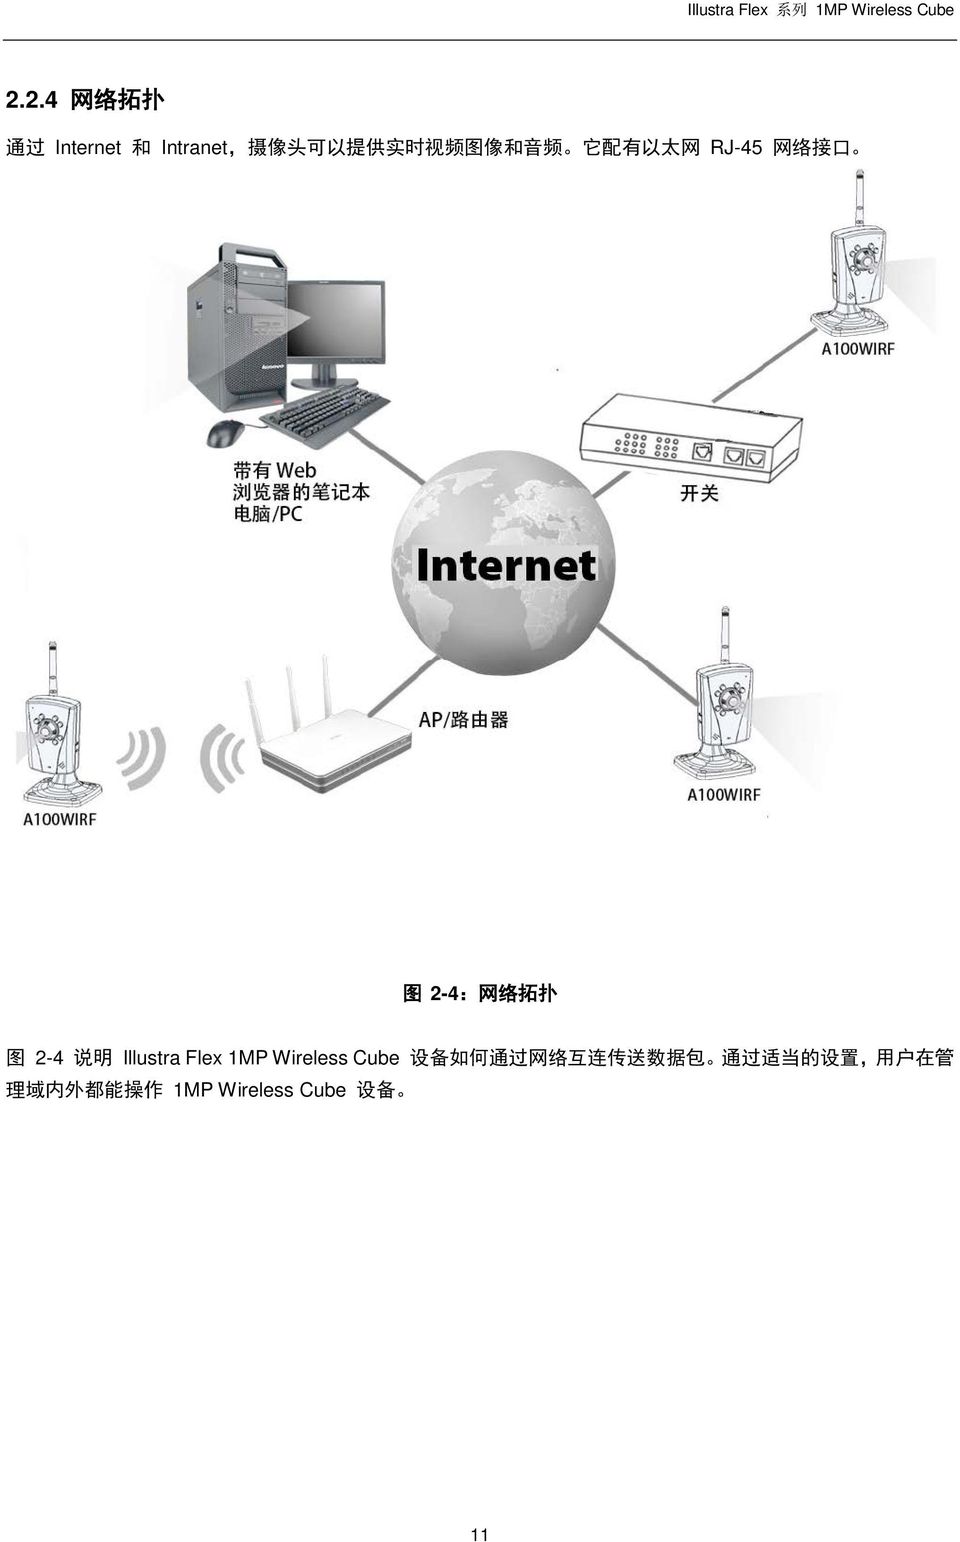 Illustra Flex 1MP Wireless Cube 设 备 如 何 通 过 网 络 互 连 传 送 数 据 包